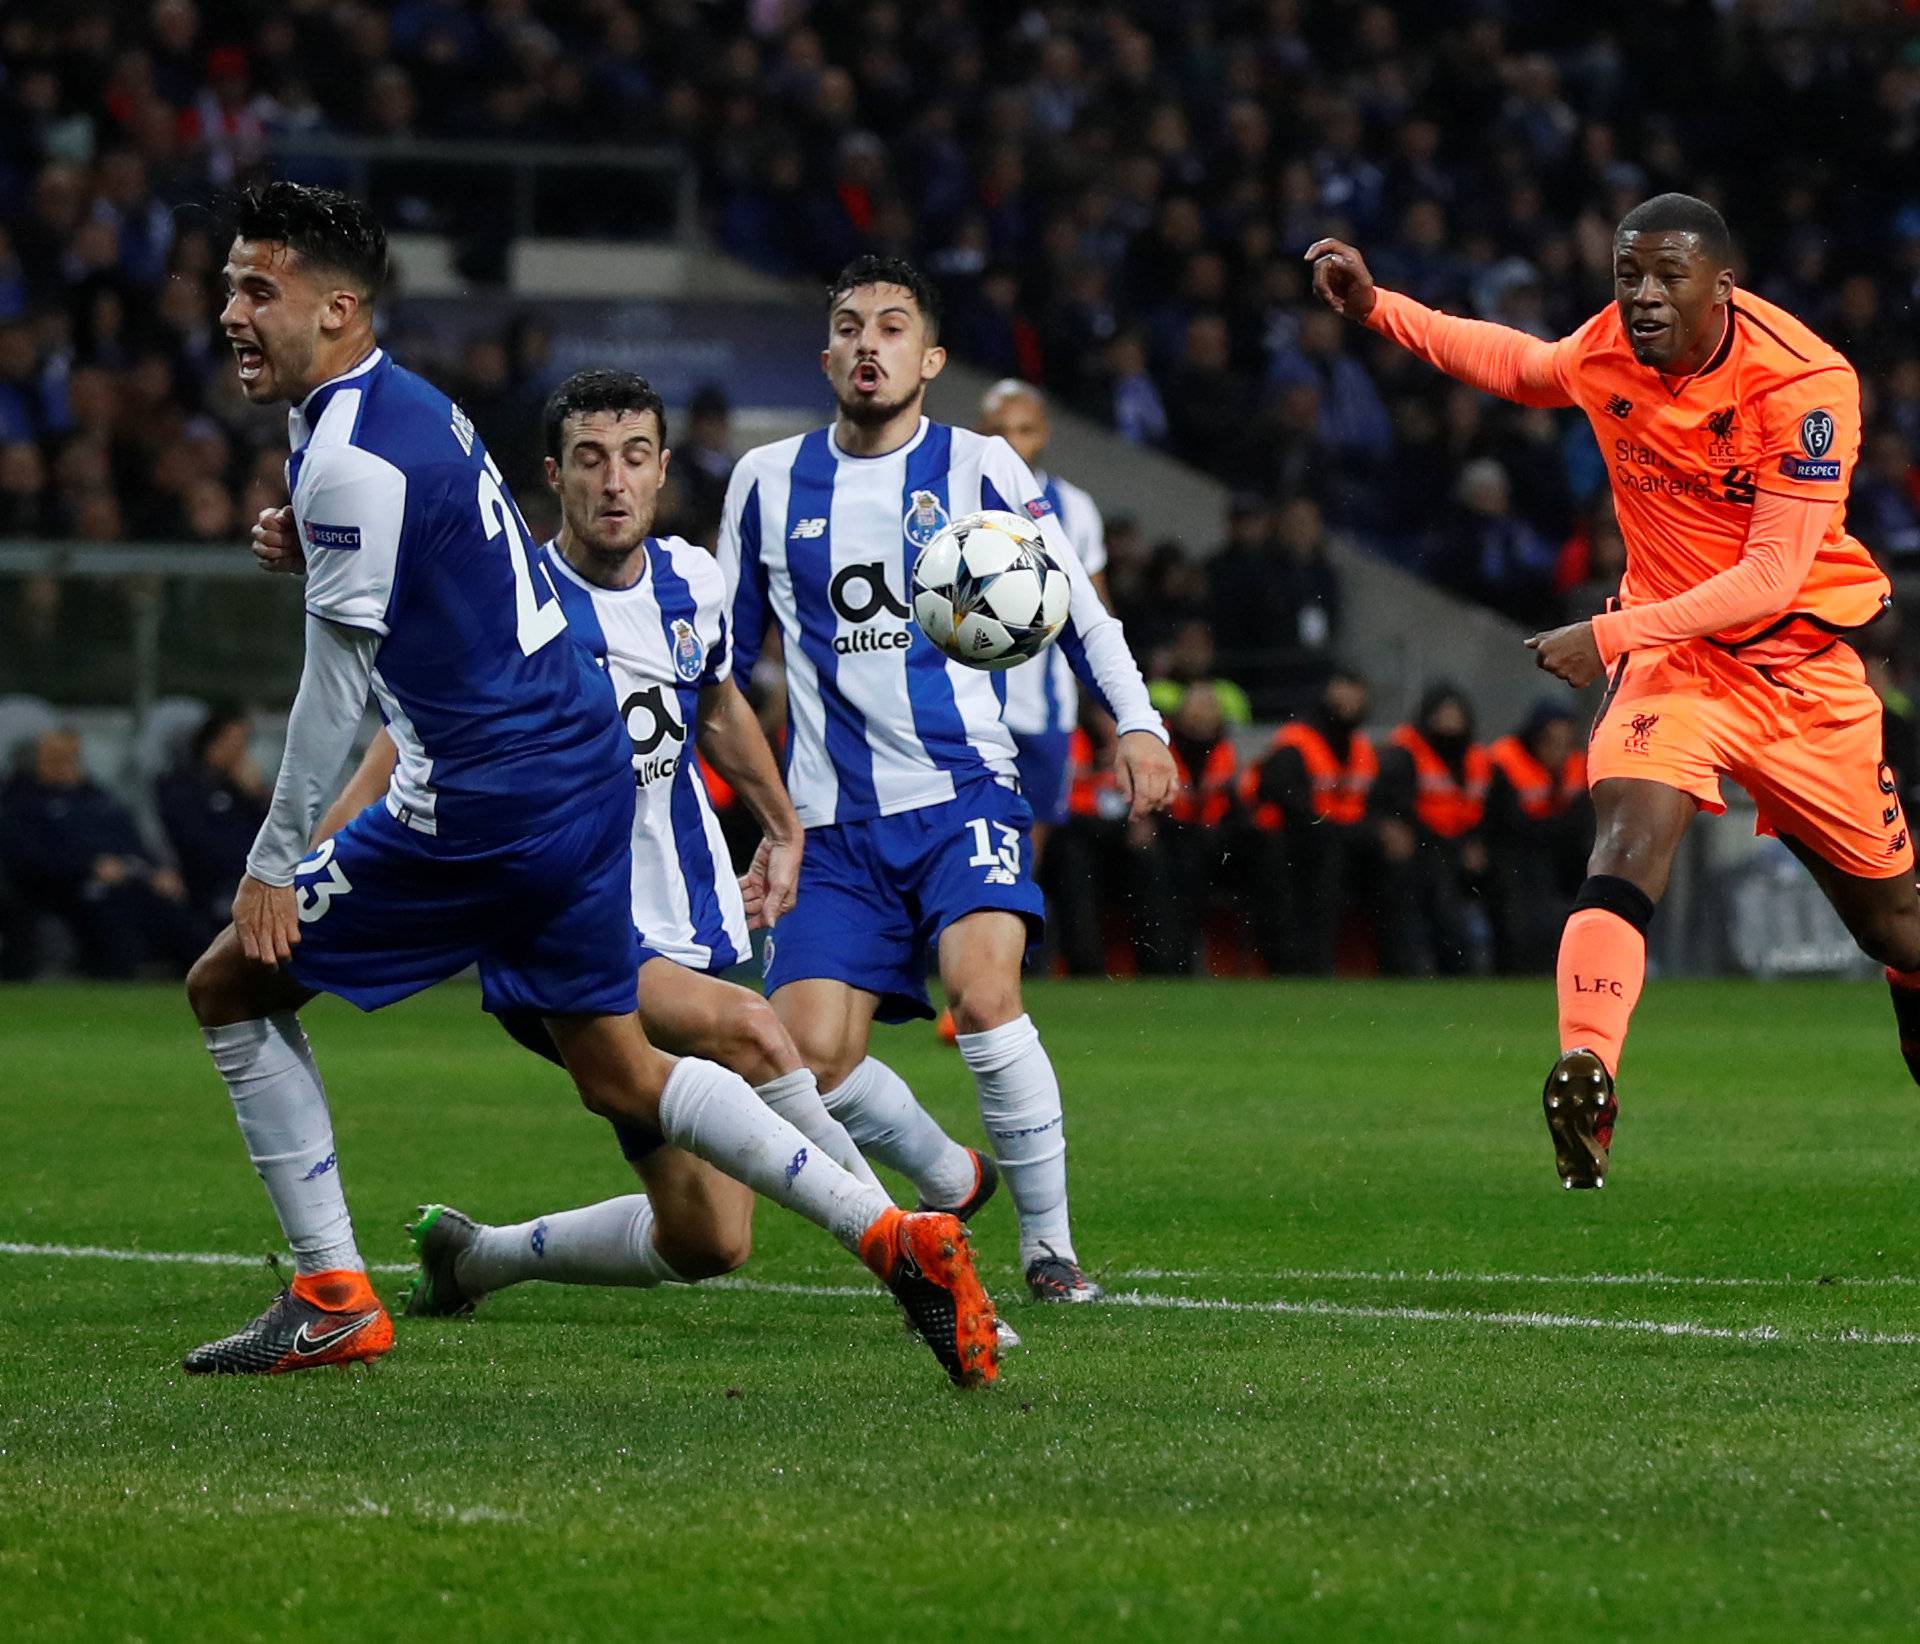 Champions League Round of 16 First Leg - FC Porto vs Liverpool